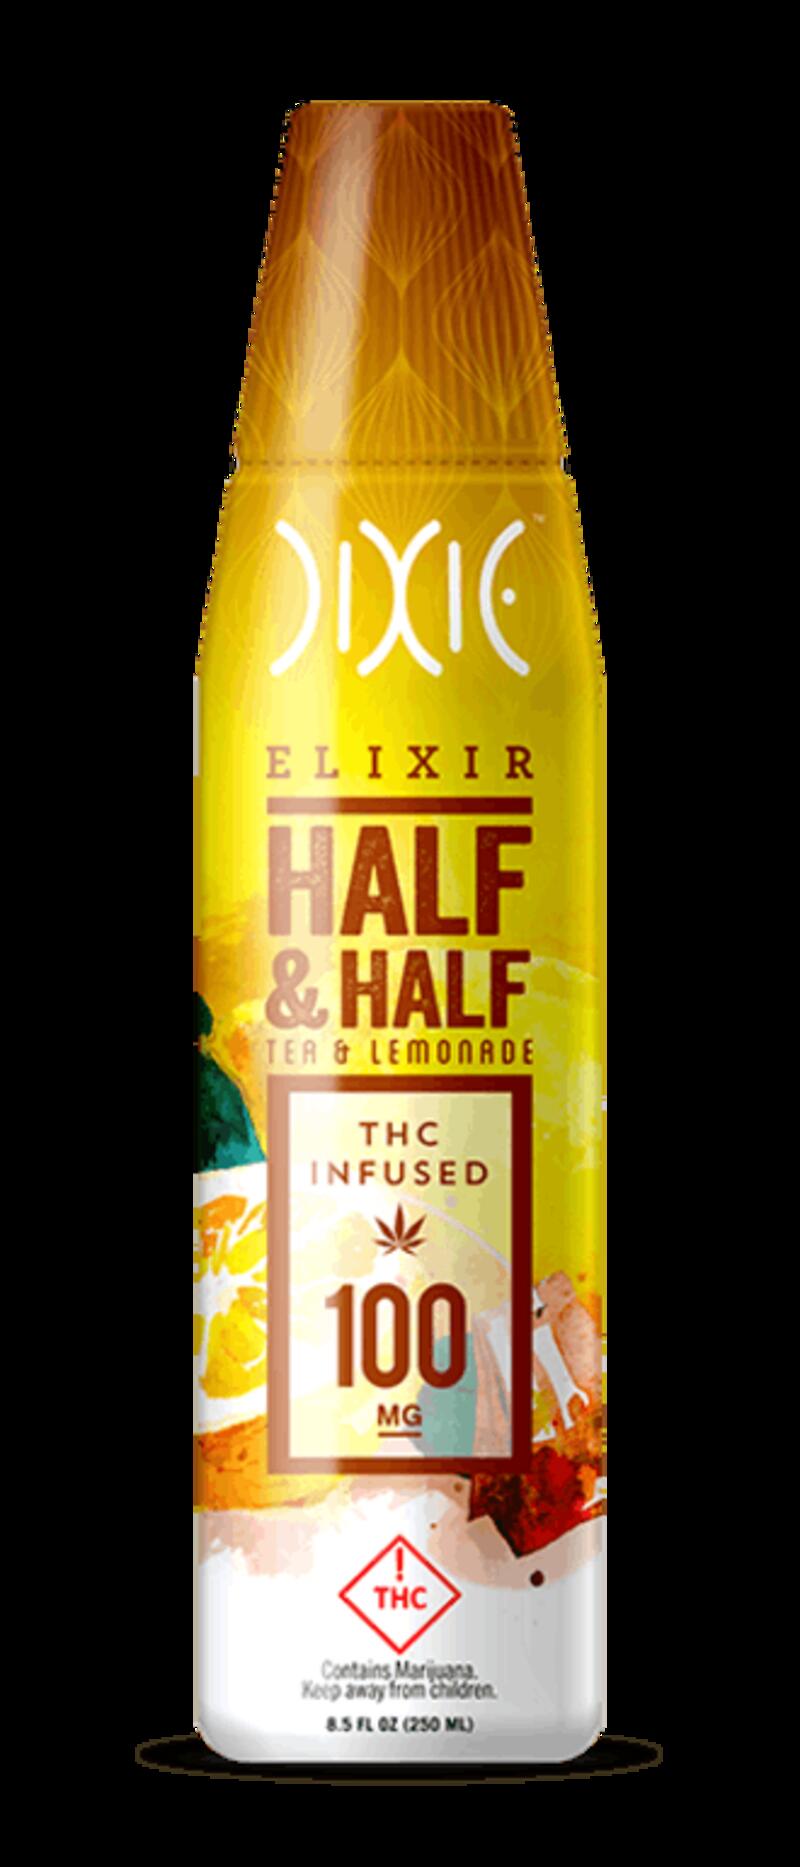 Dixie Elixir 100mg Hlaf & Half